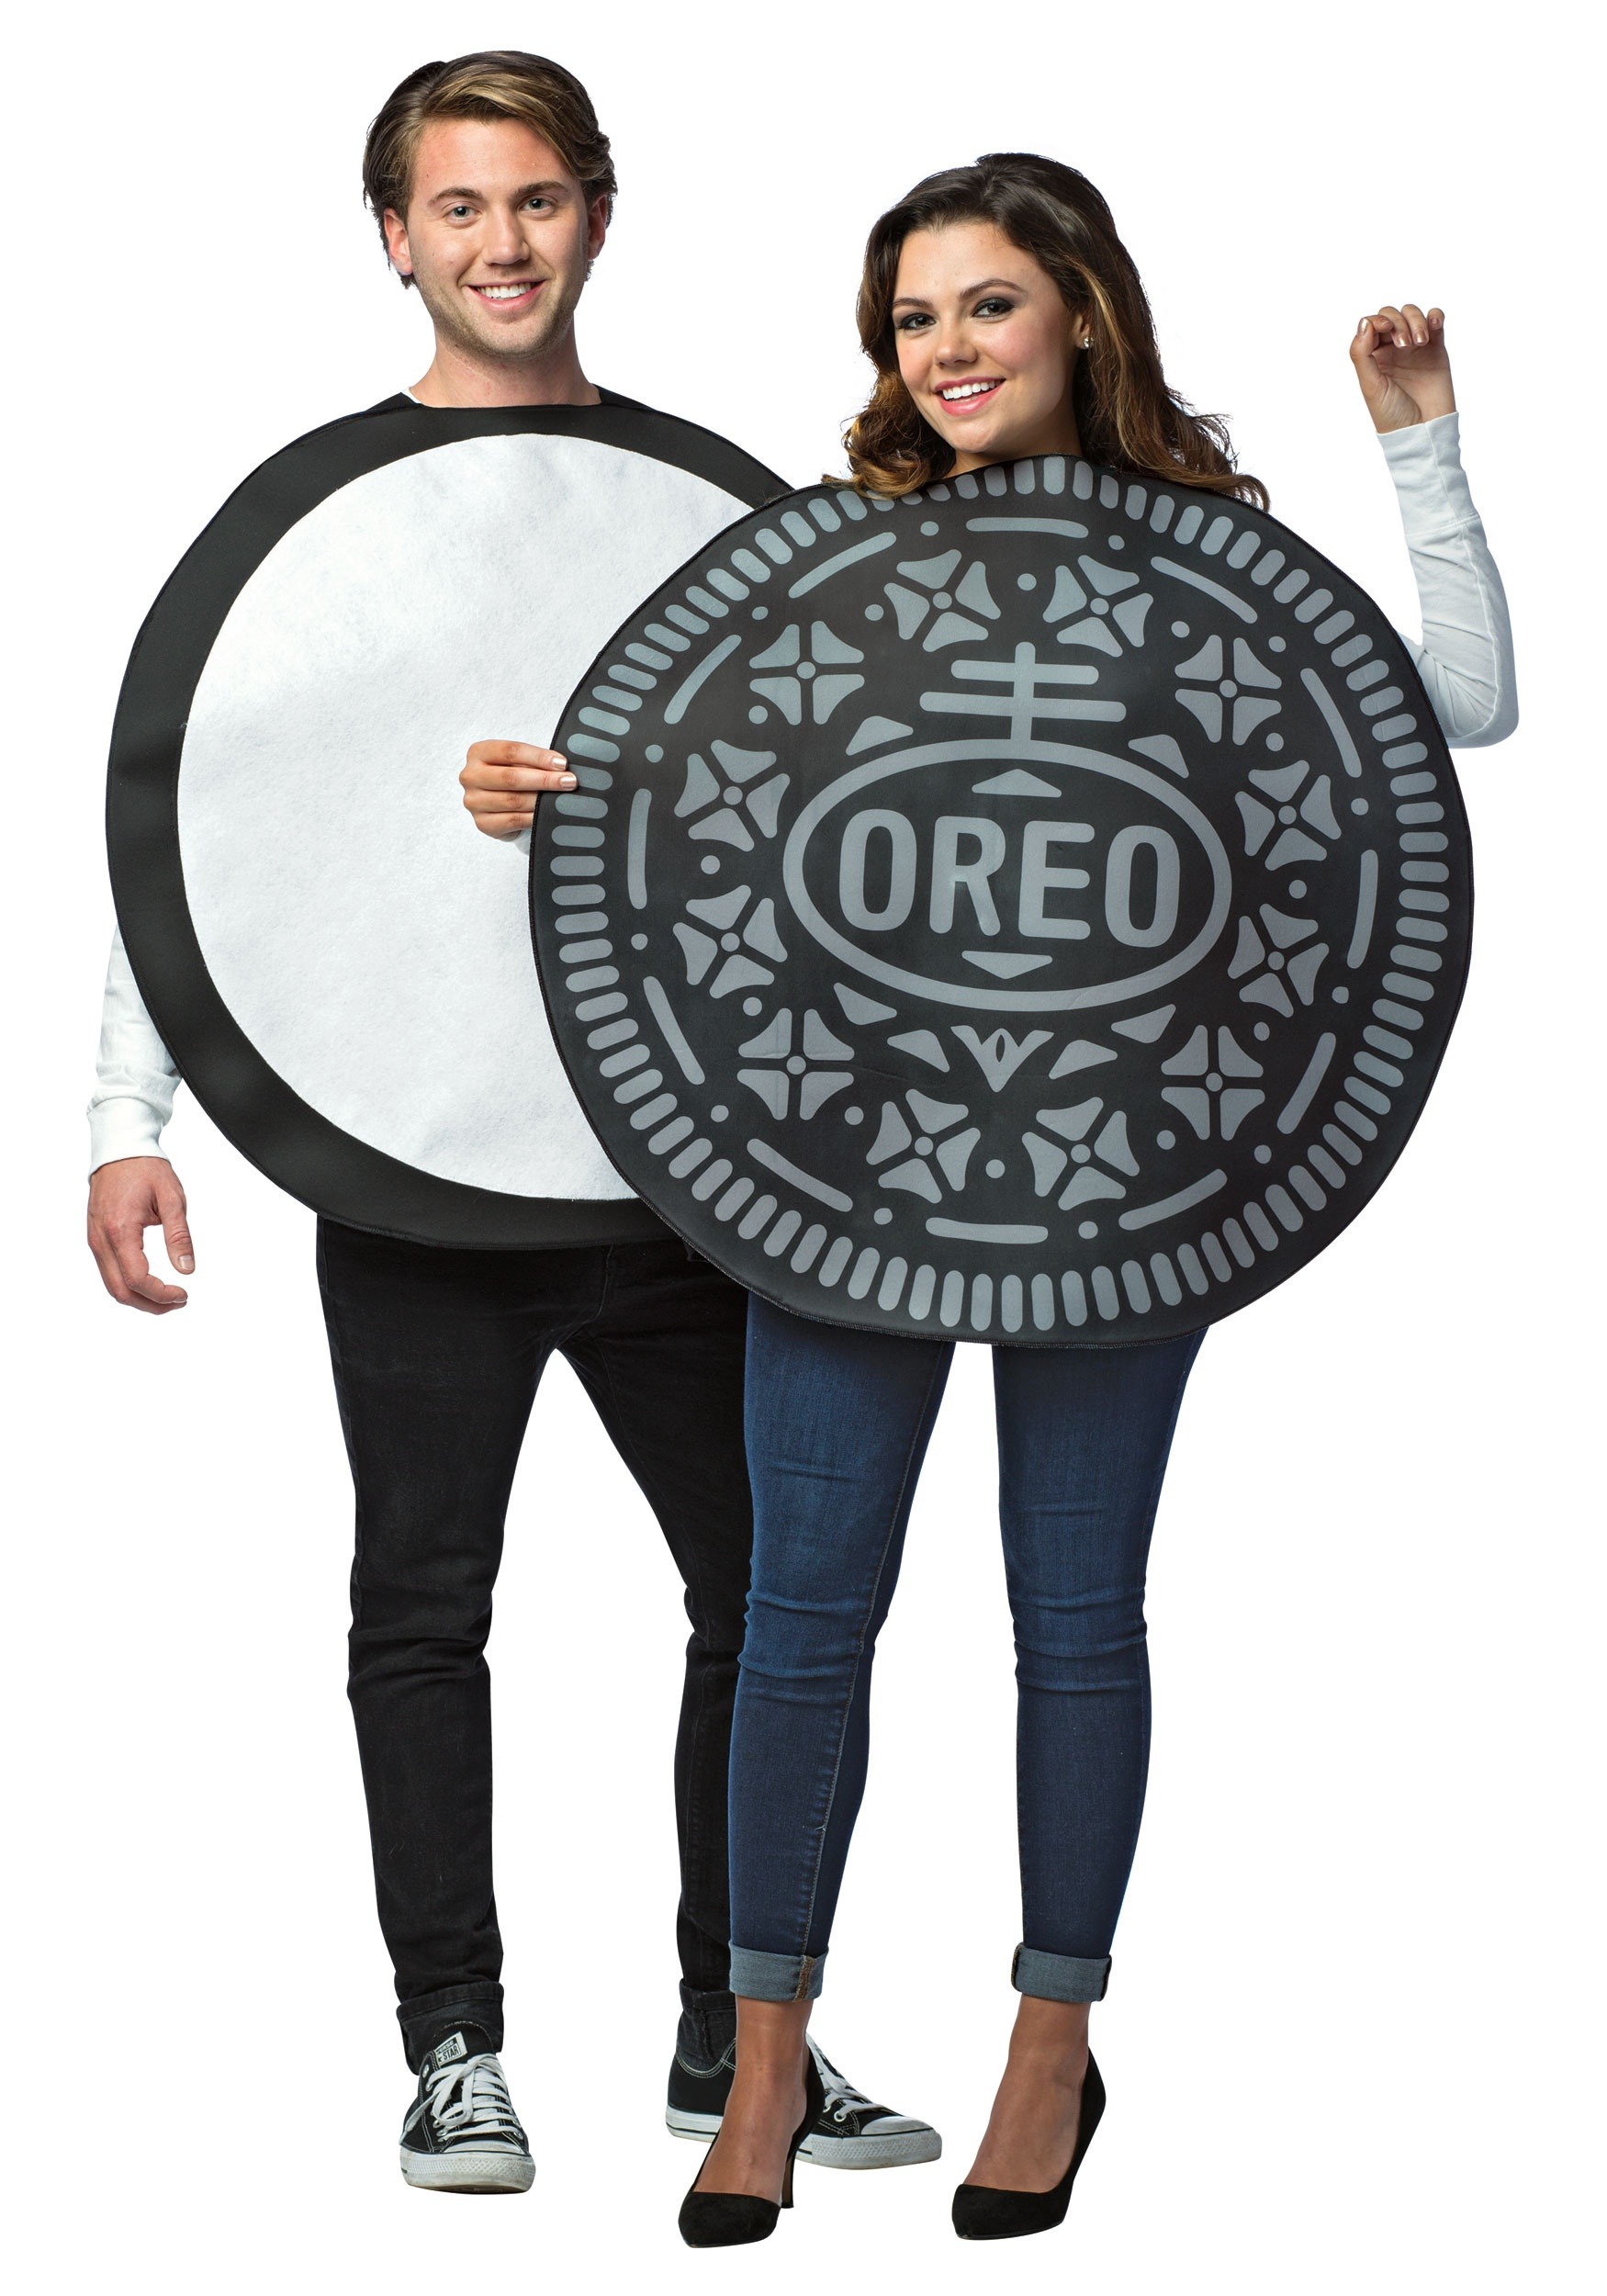 Morris Costumes Adult Oreo Cookie Couples Costume